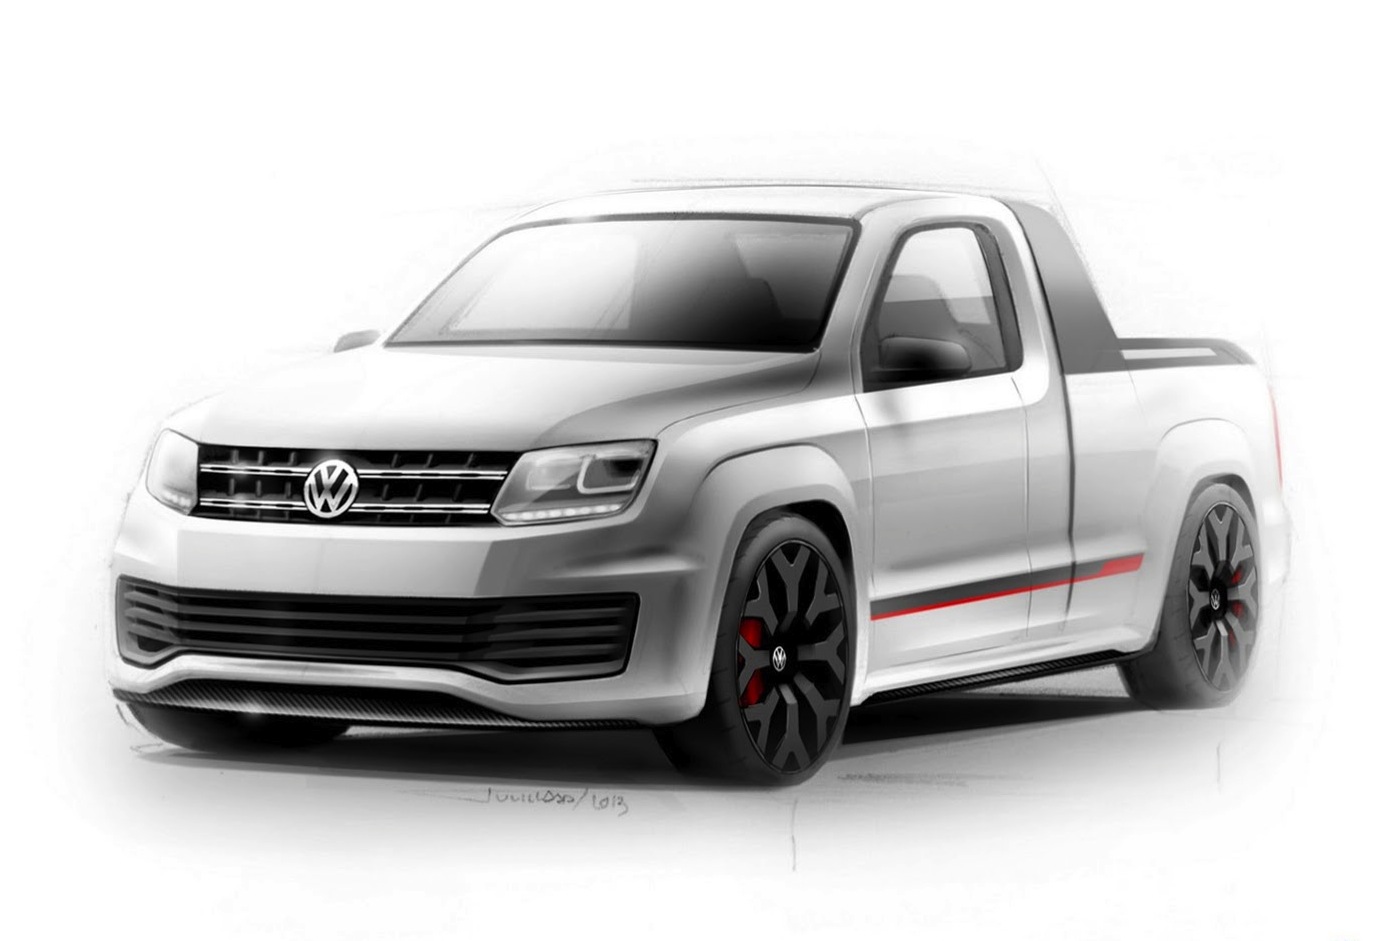 200kW Volkswagen Amarok R-Style concept headed to Worthersee